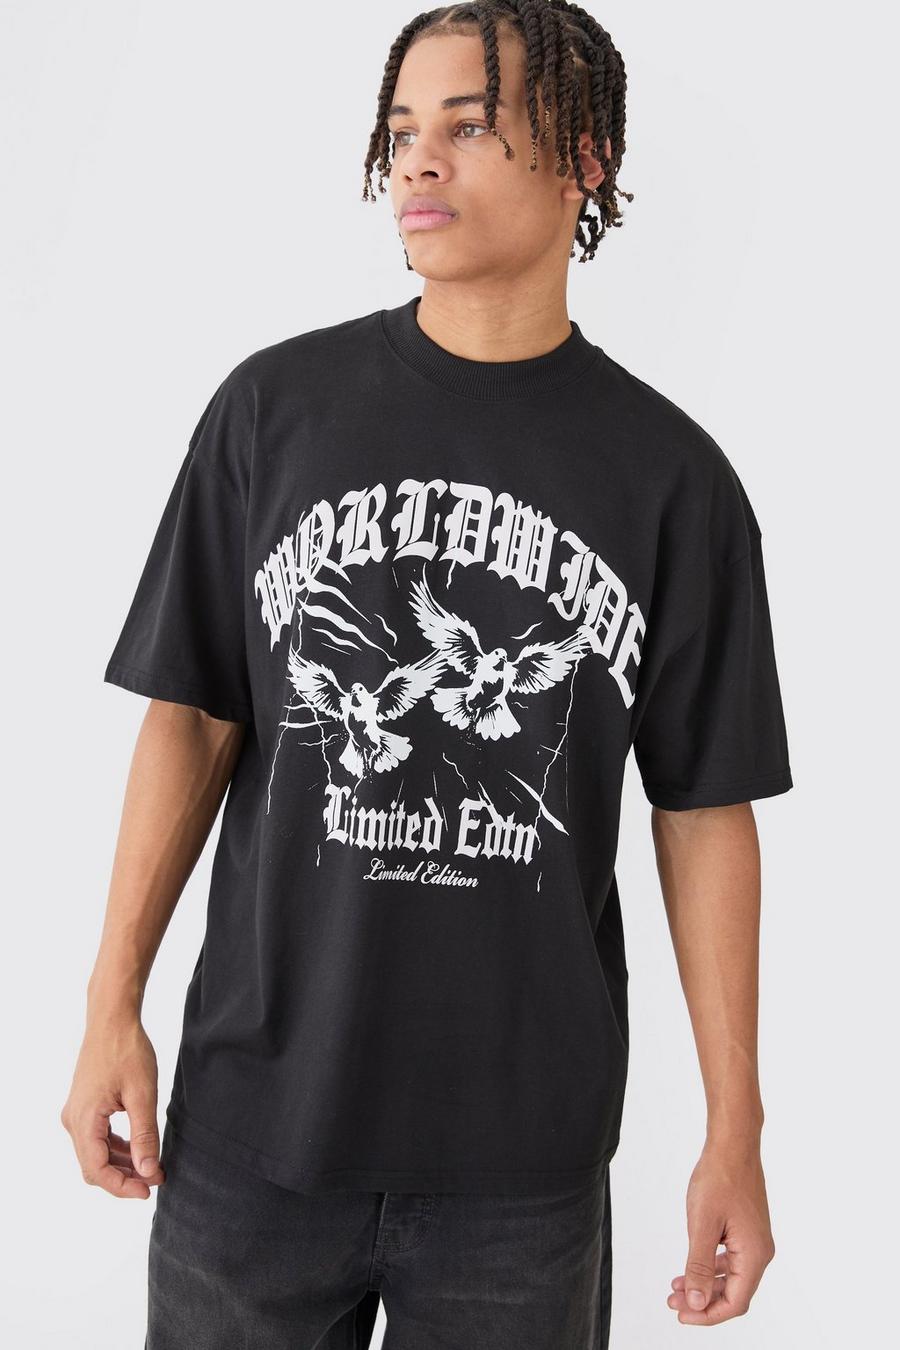 T-shirt oversize con testo in caratteri gotici di uccelli, Black